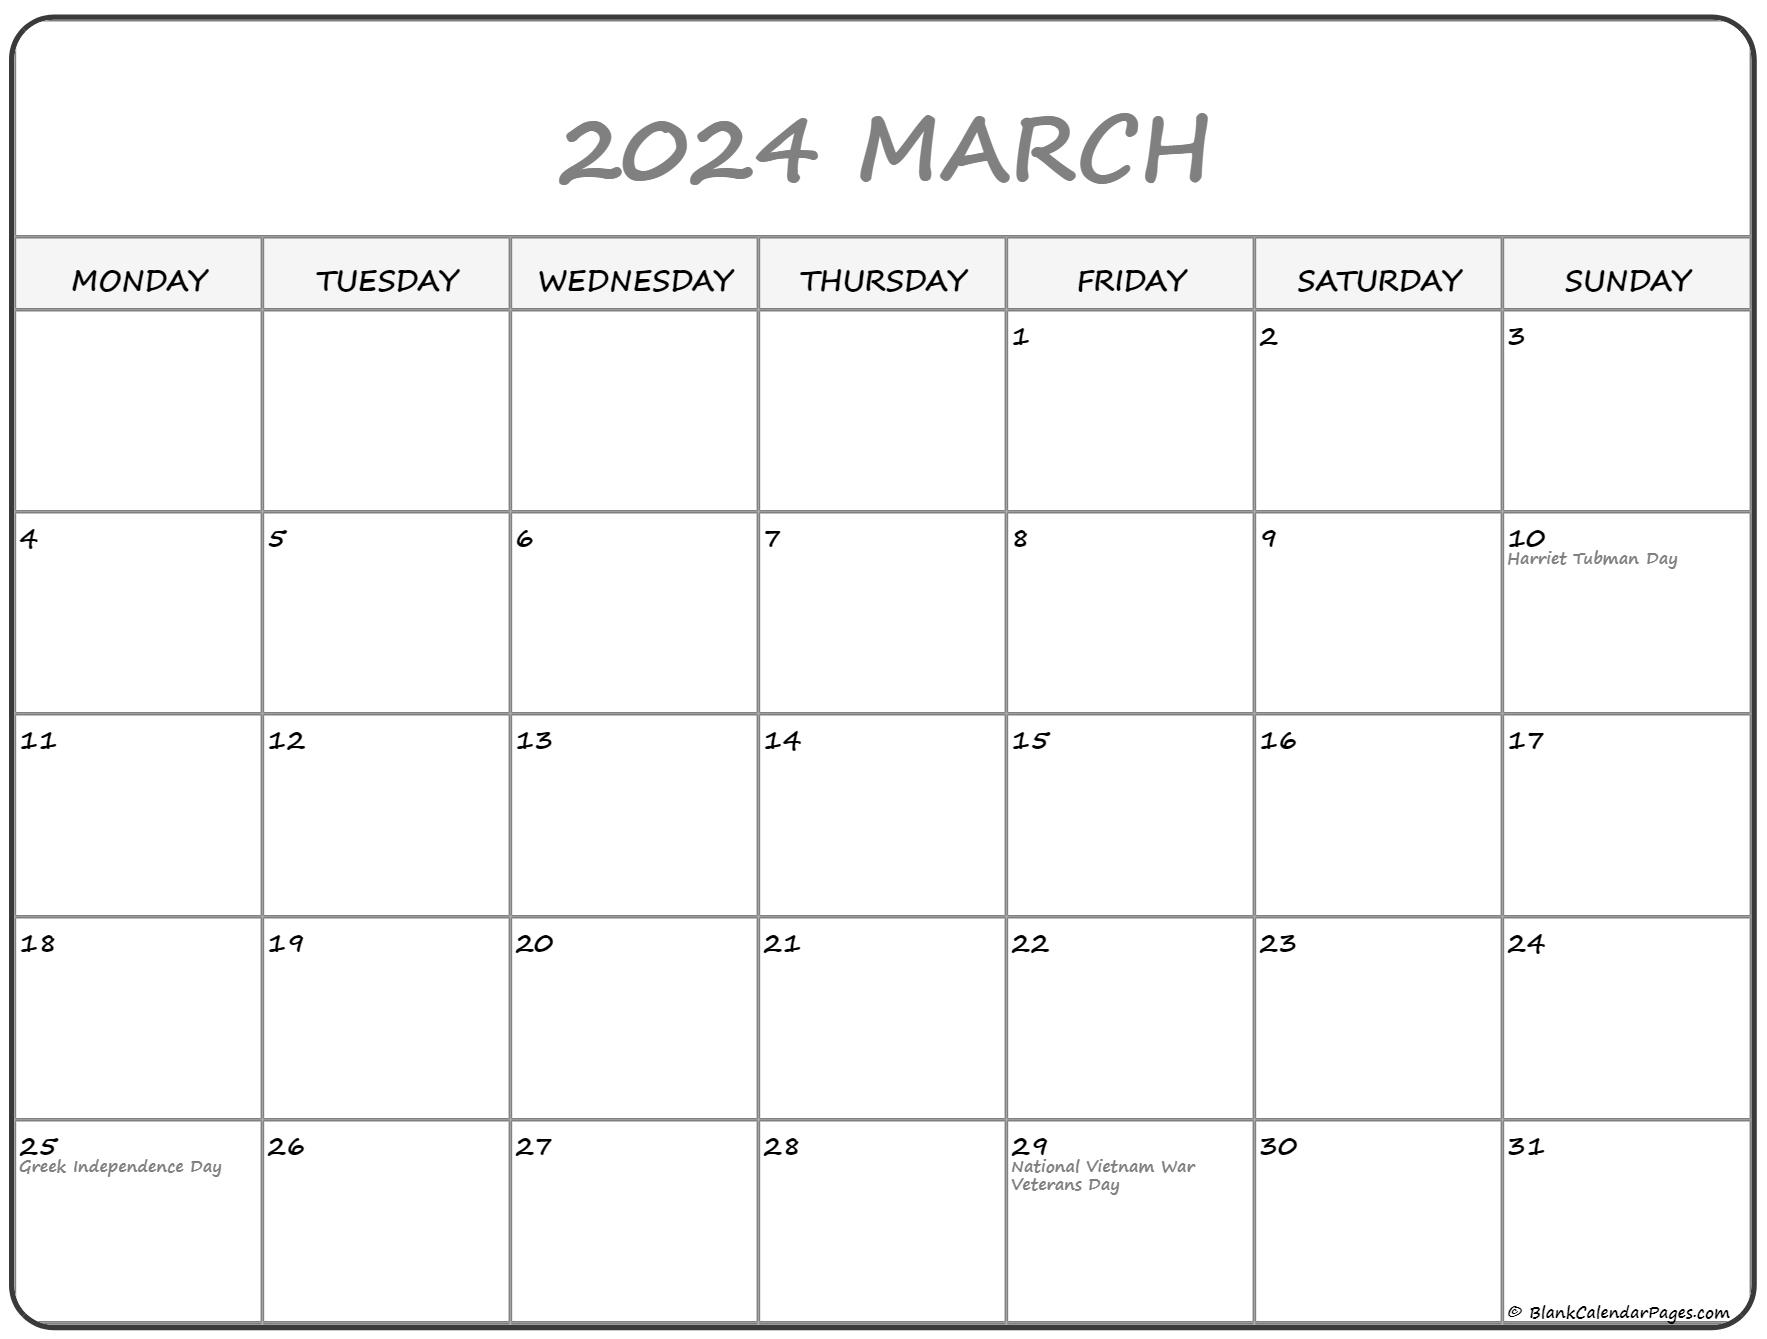 calendar-annual-2023-42-michel-zbinden-en